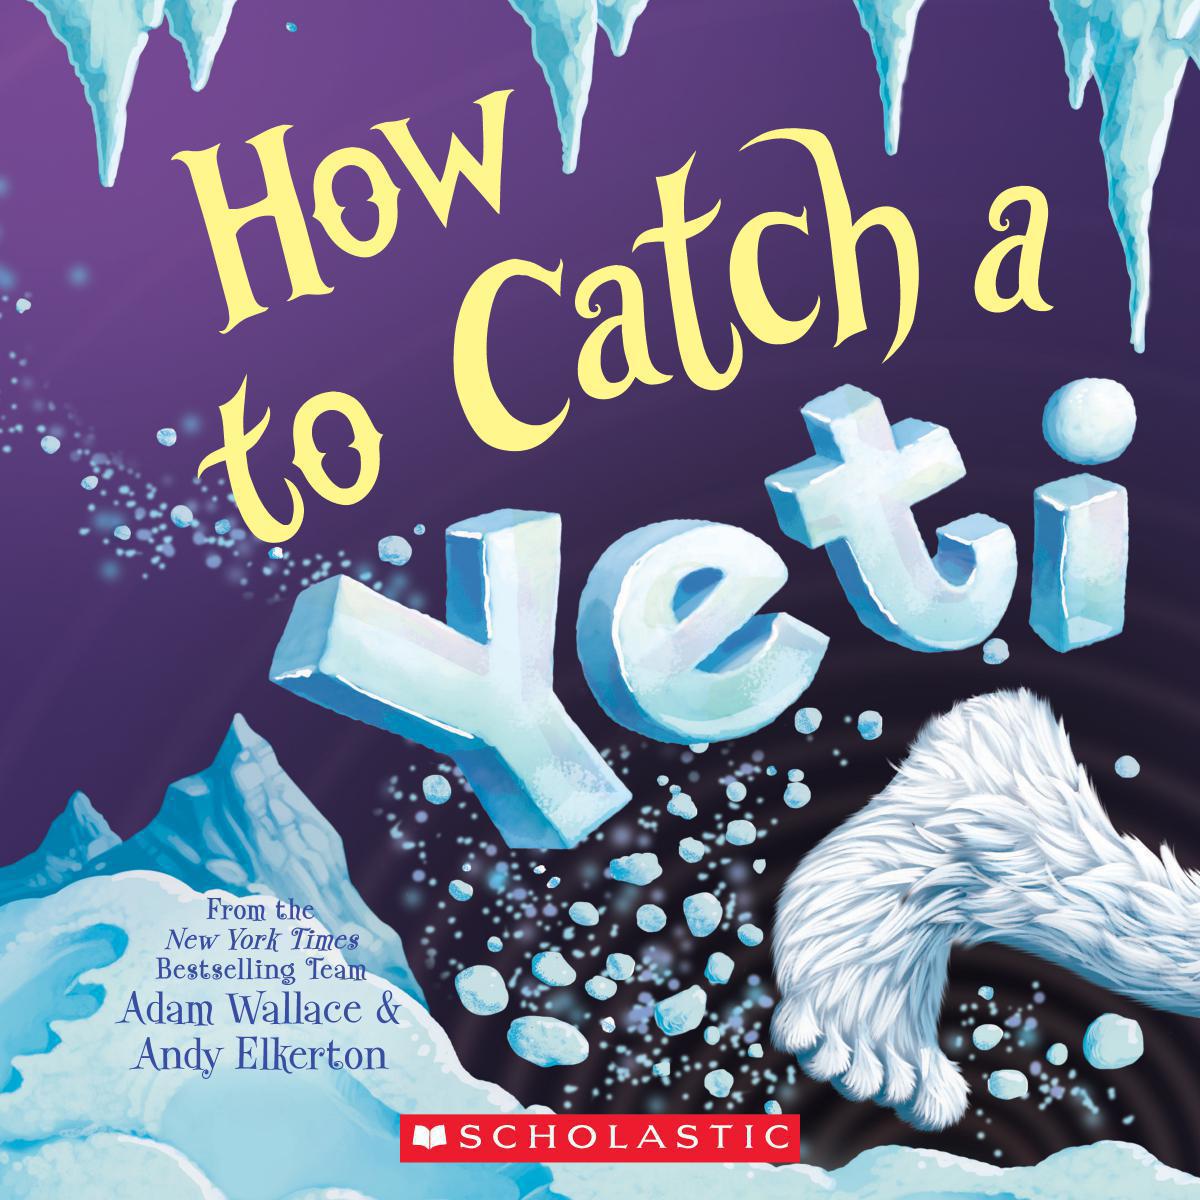  How to Catch a Yeti 